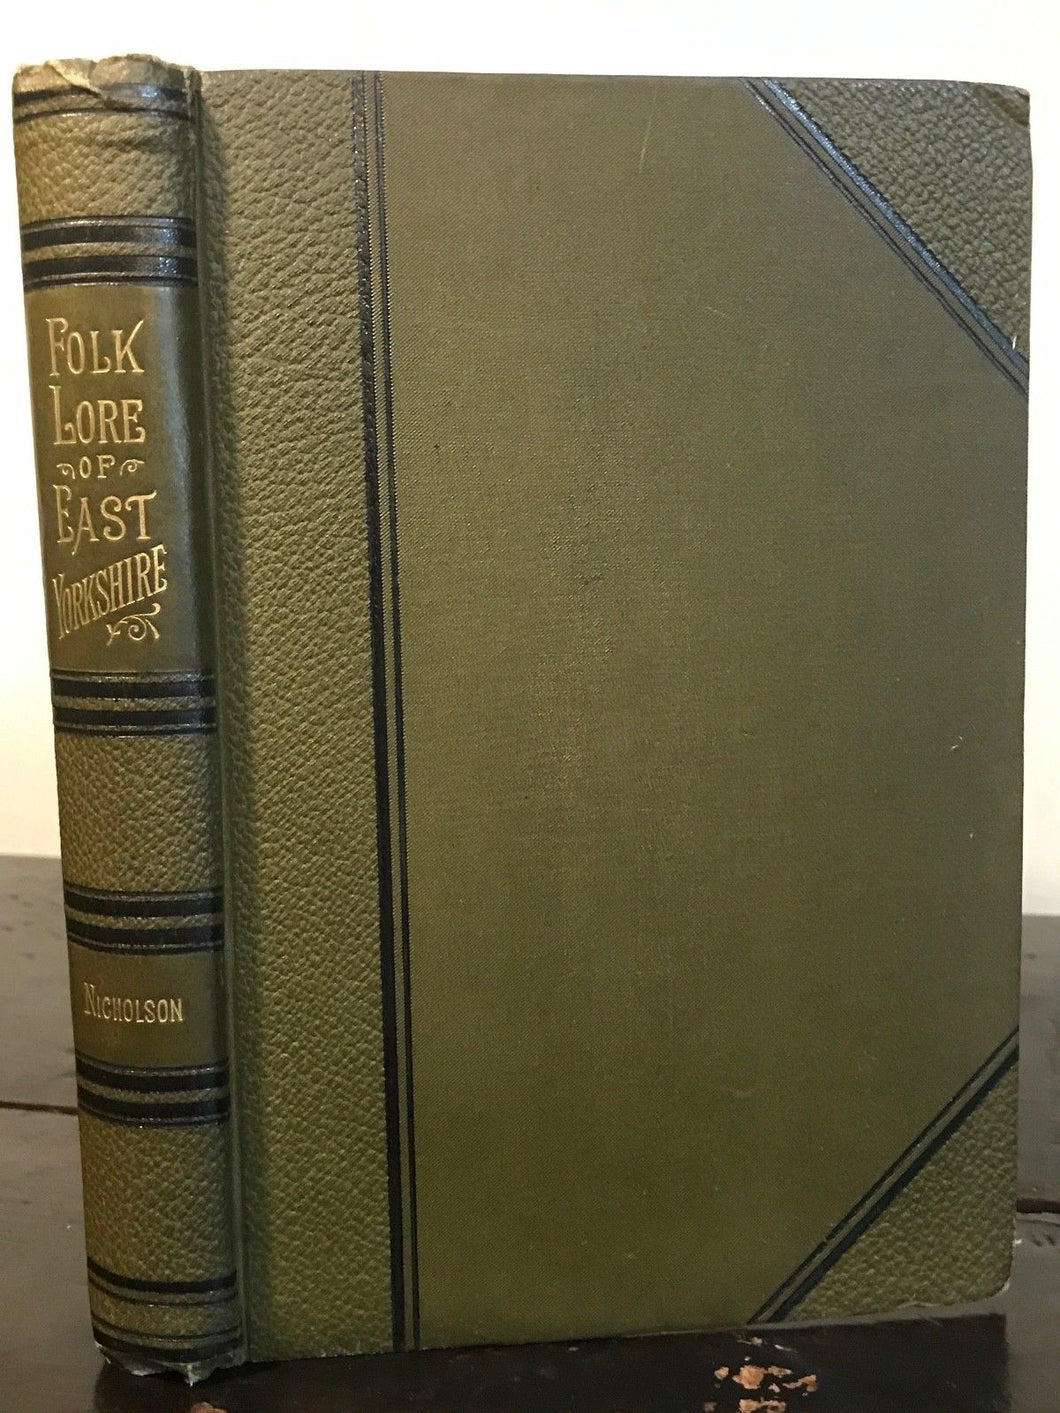 1890 - FOLKLORE OF EAST YORKSHIRE, John Nicholson 1st/1st Scarce GHOSTS FAIRIES